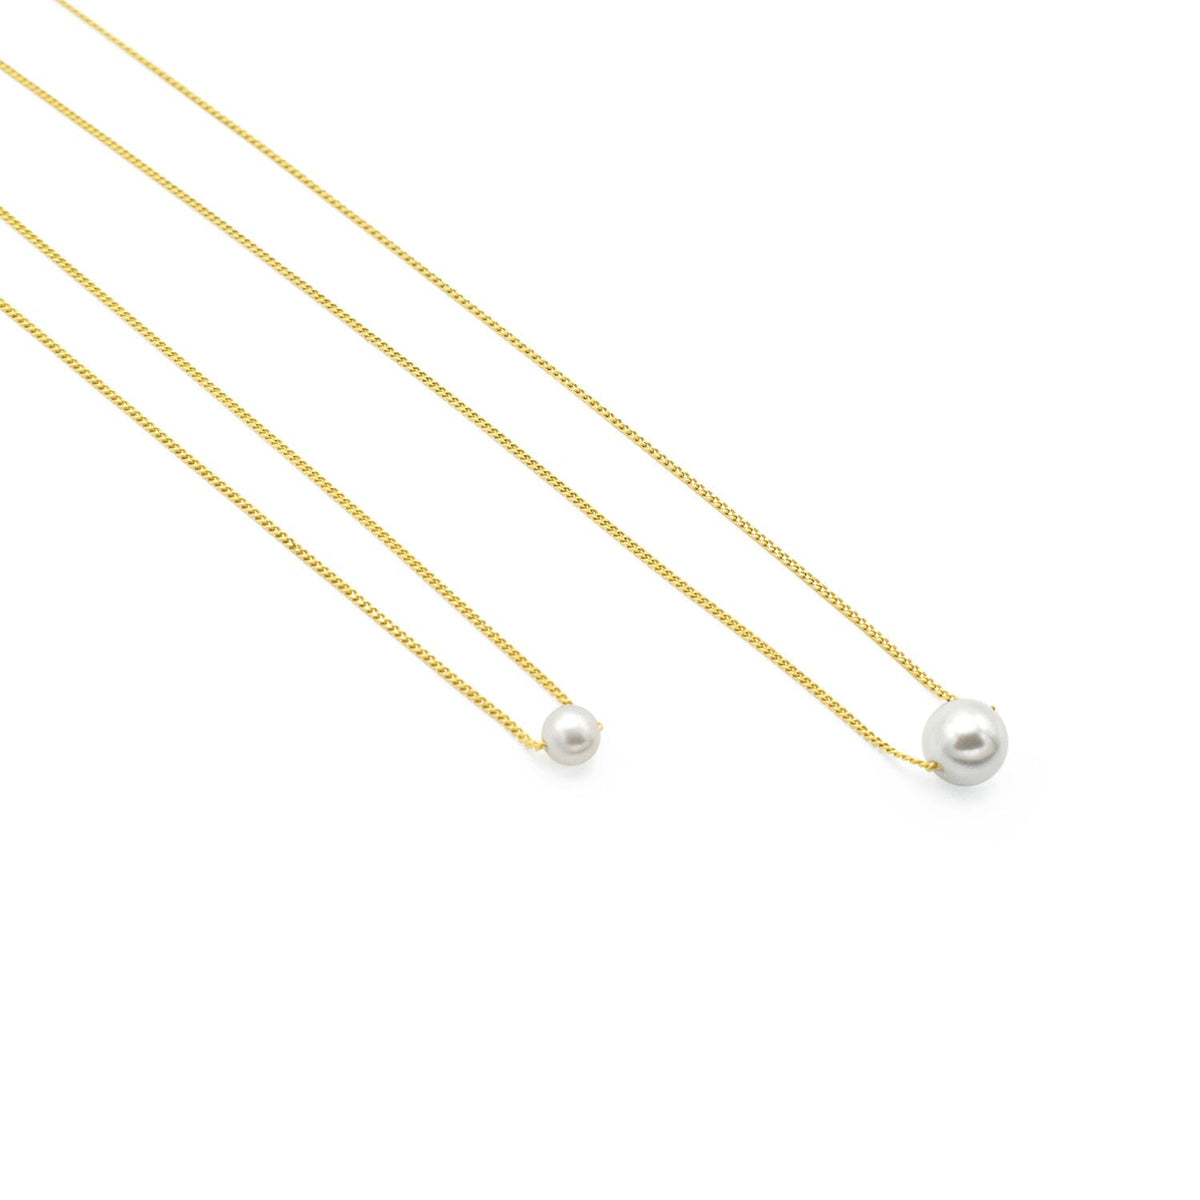 Pearl Necklaces Gold 14k and 18k - Parel Kettingen Goud  - 2 sizes